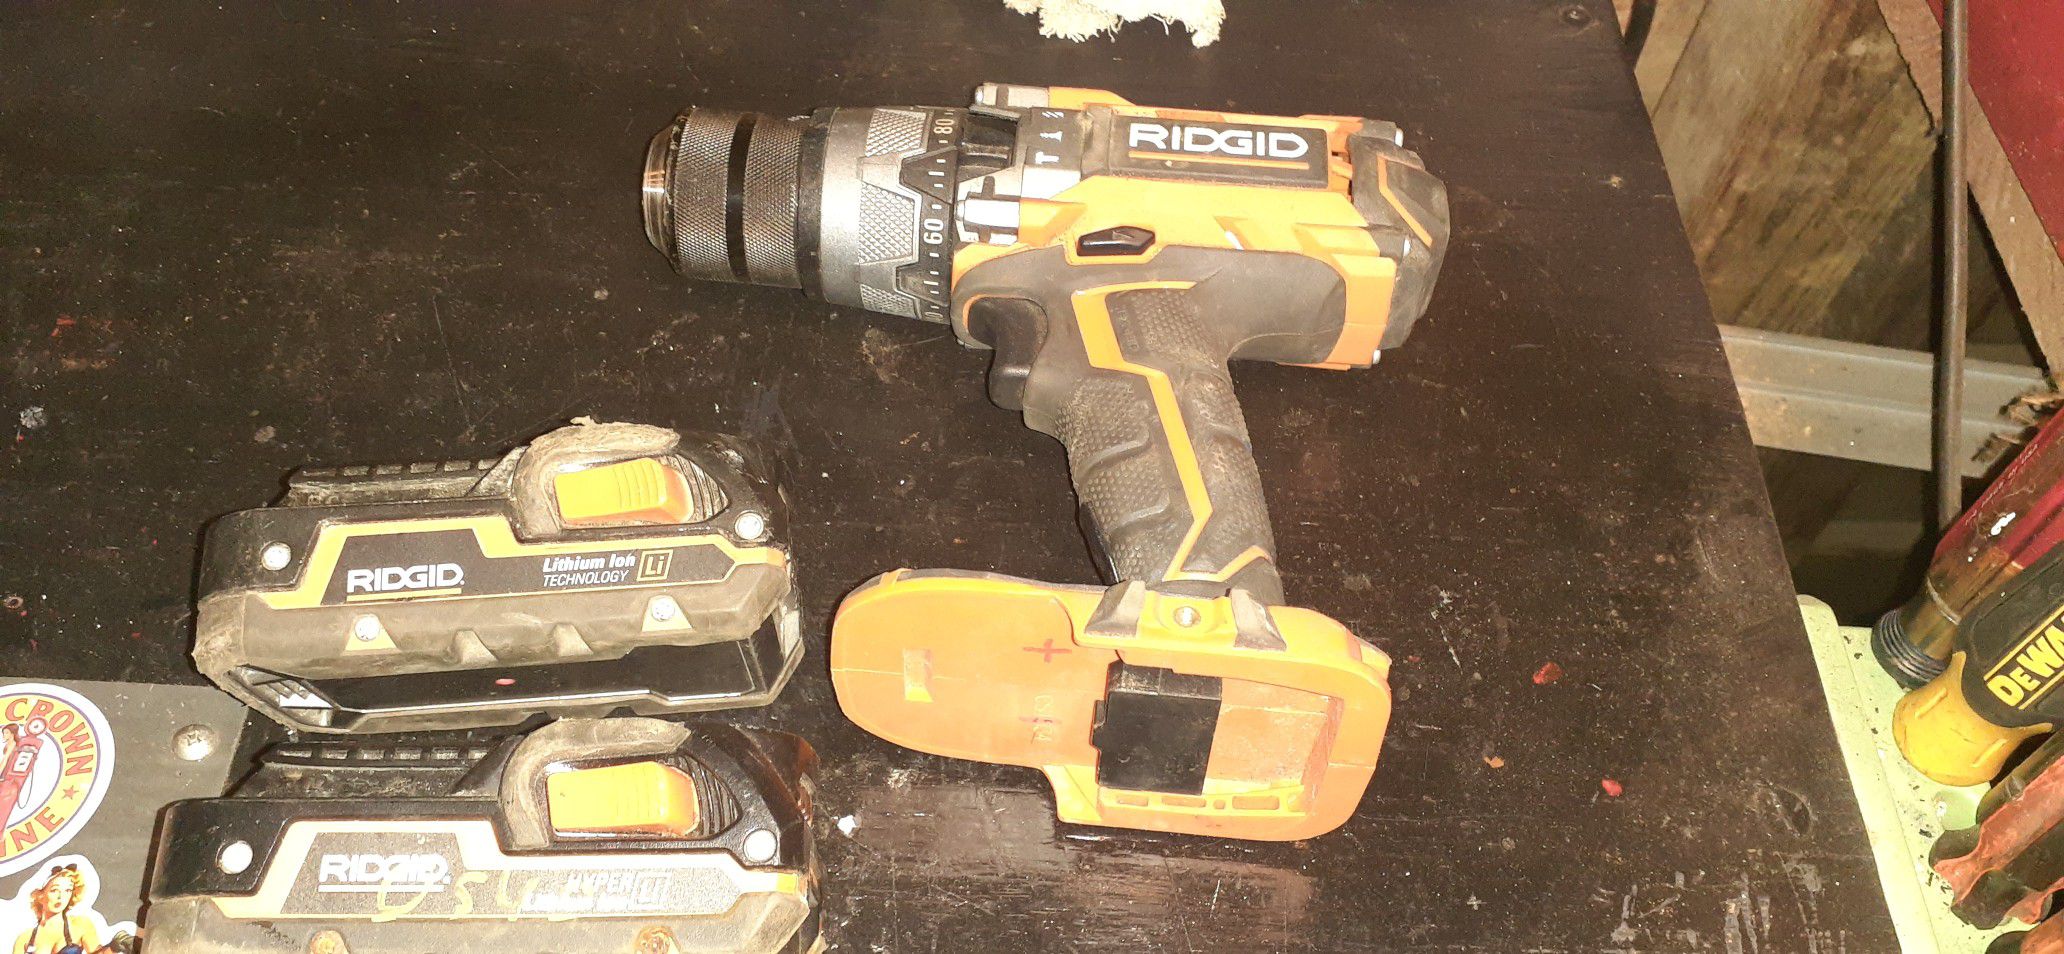 Rigid gen. 5x hammer drill and 2 batteries